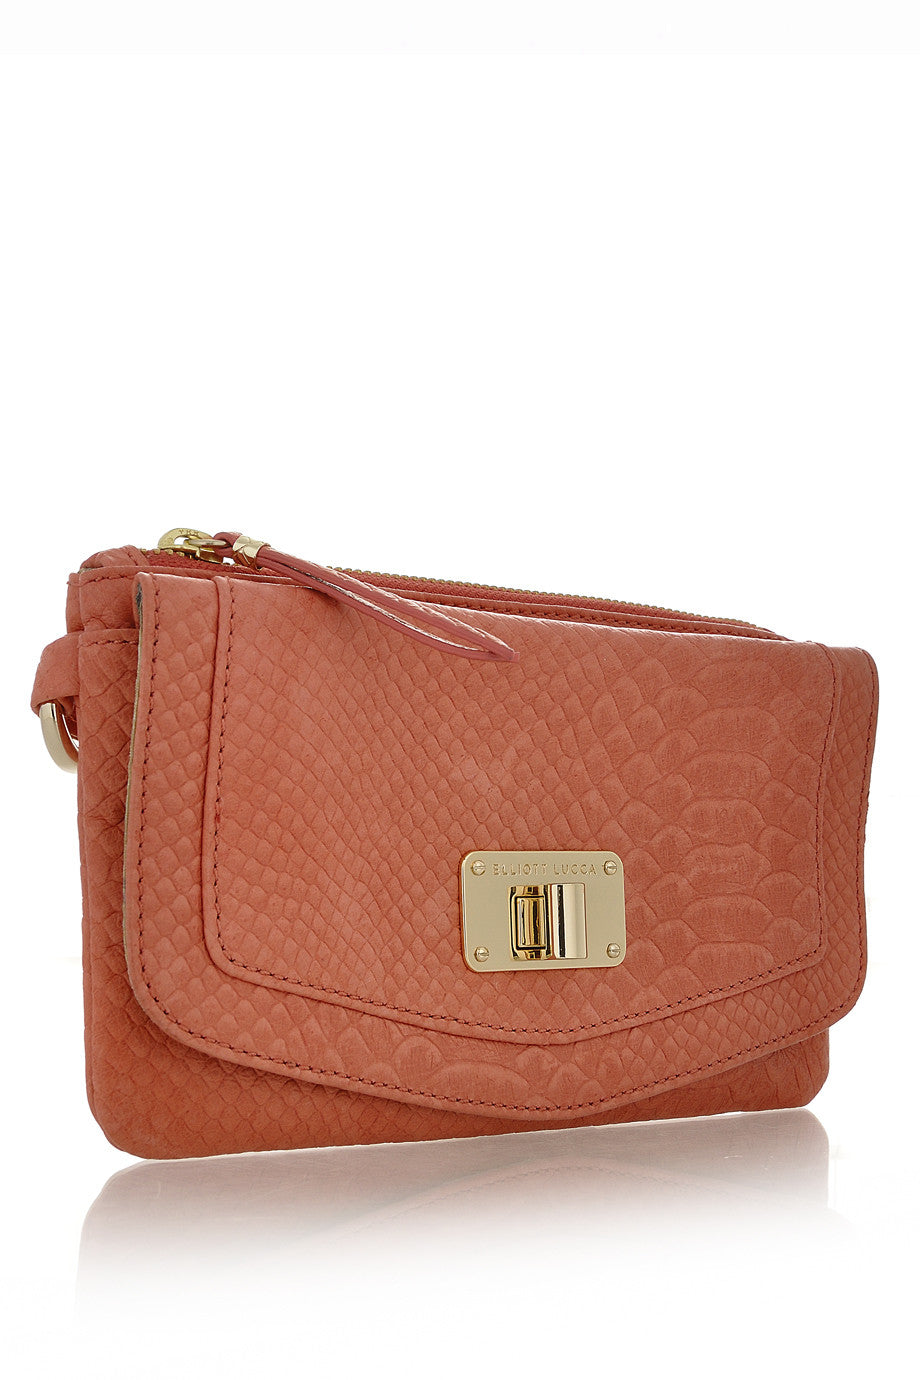 CORDOBA Coral Leather Wallet